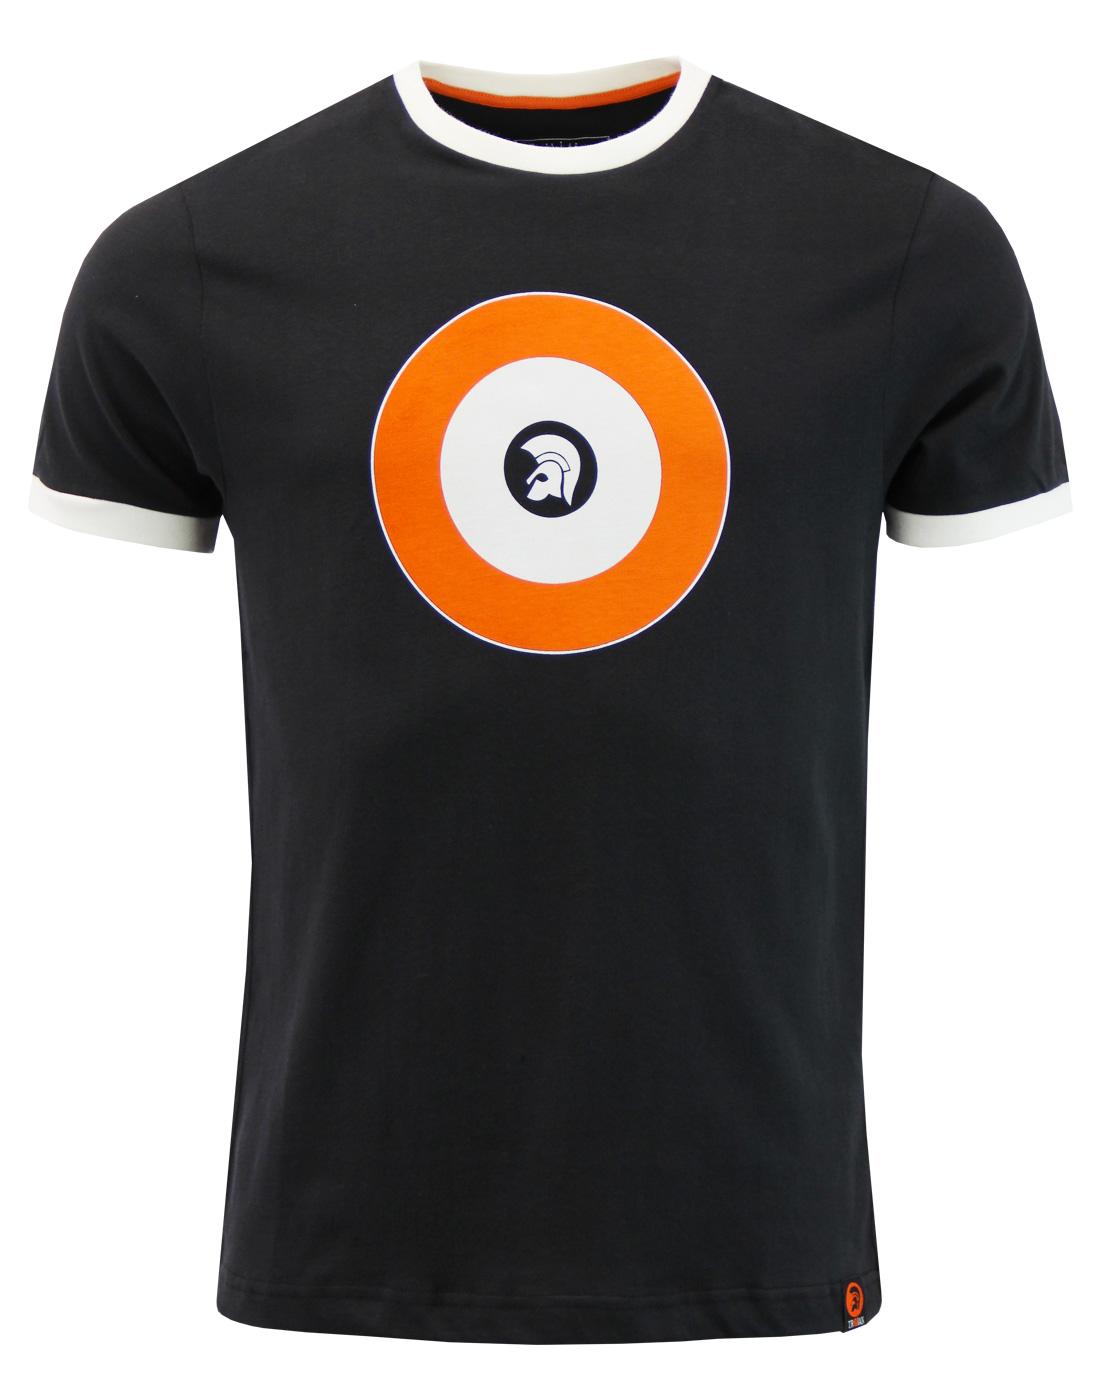 TROJAN RECORDS Helmet Logo Mod Target T-Shirt (B)